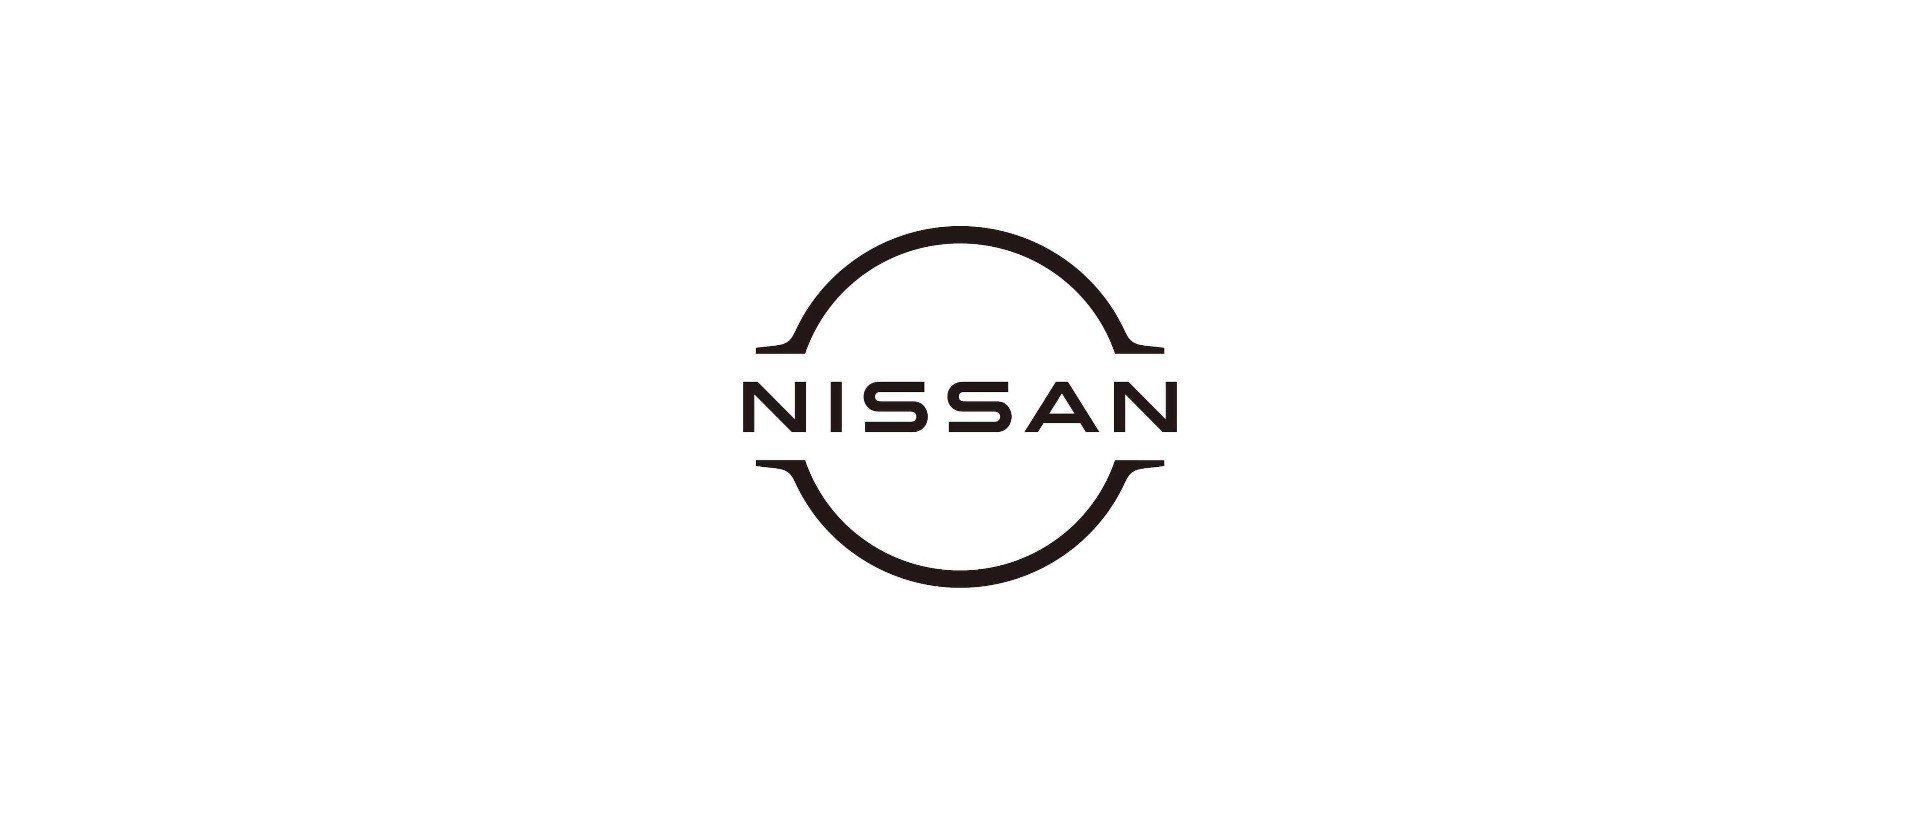 Tags - nissan logo png - Crush Logo - Free Branded Logo & Stock Photos  Download